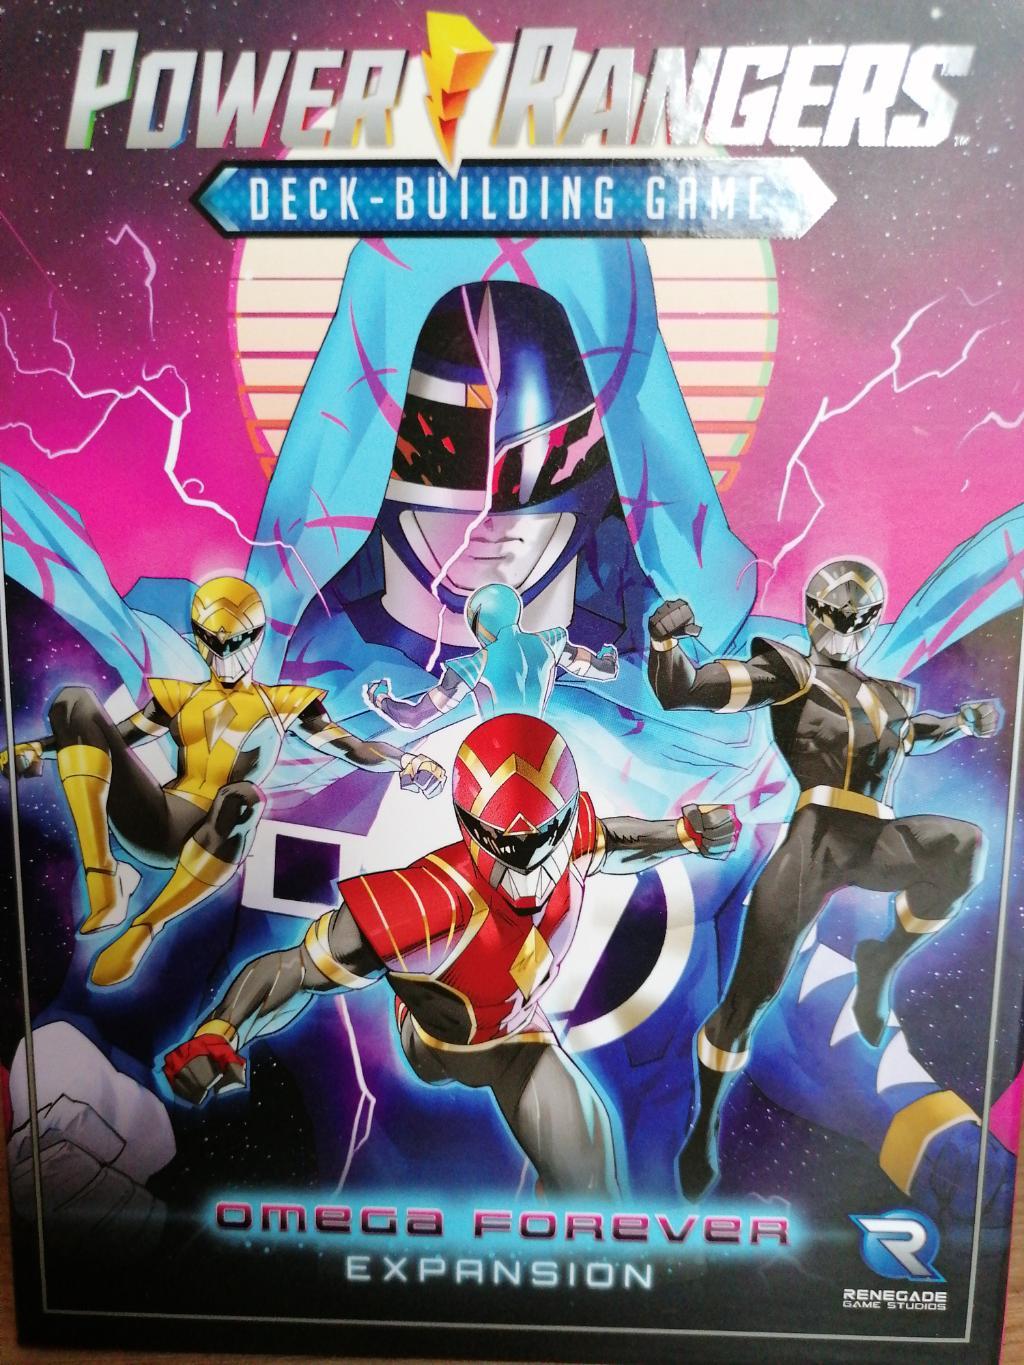 Power Rangers Deck-building Games - Omega Forever